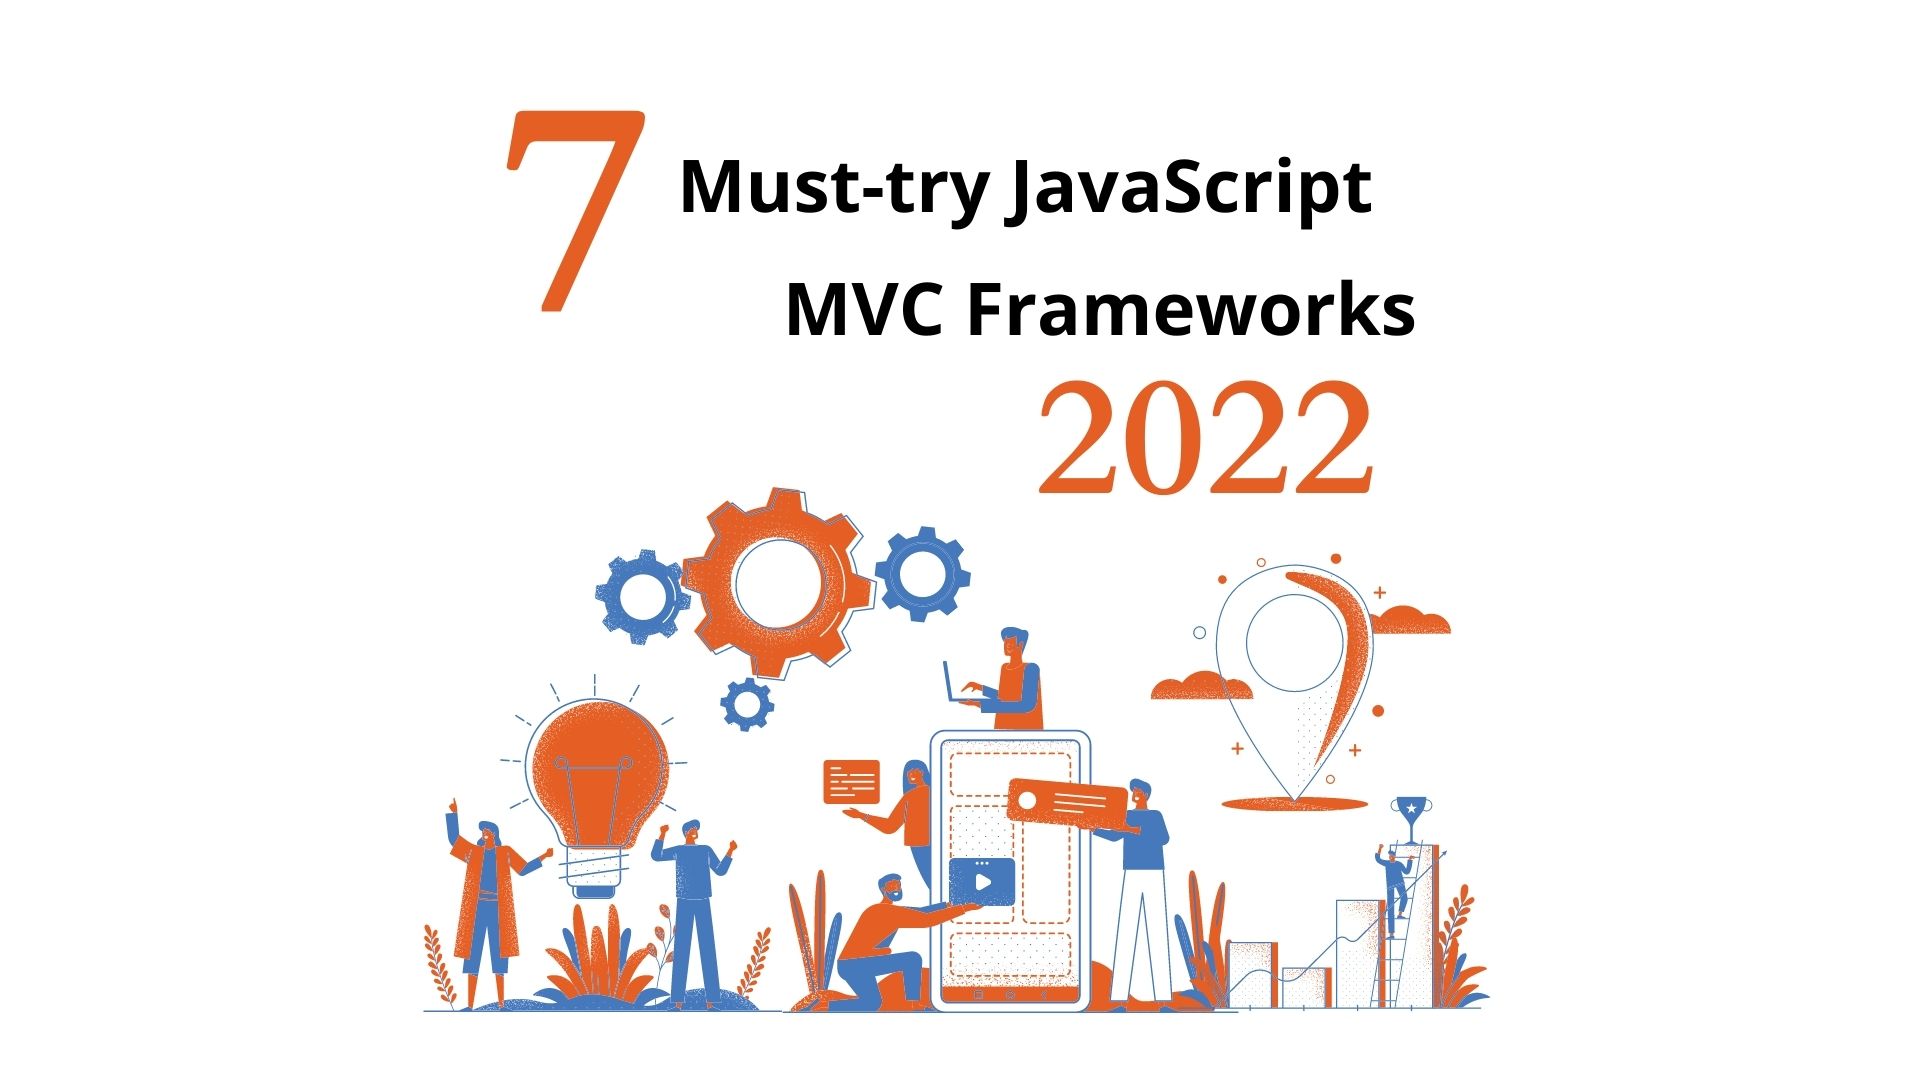 7 Must-try JavaScript MVC Frameworks in 2022